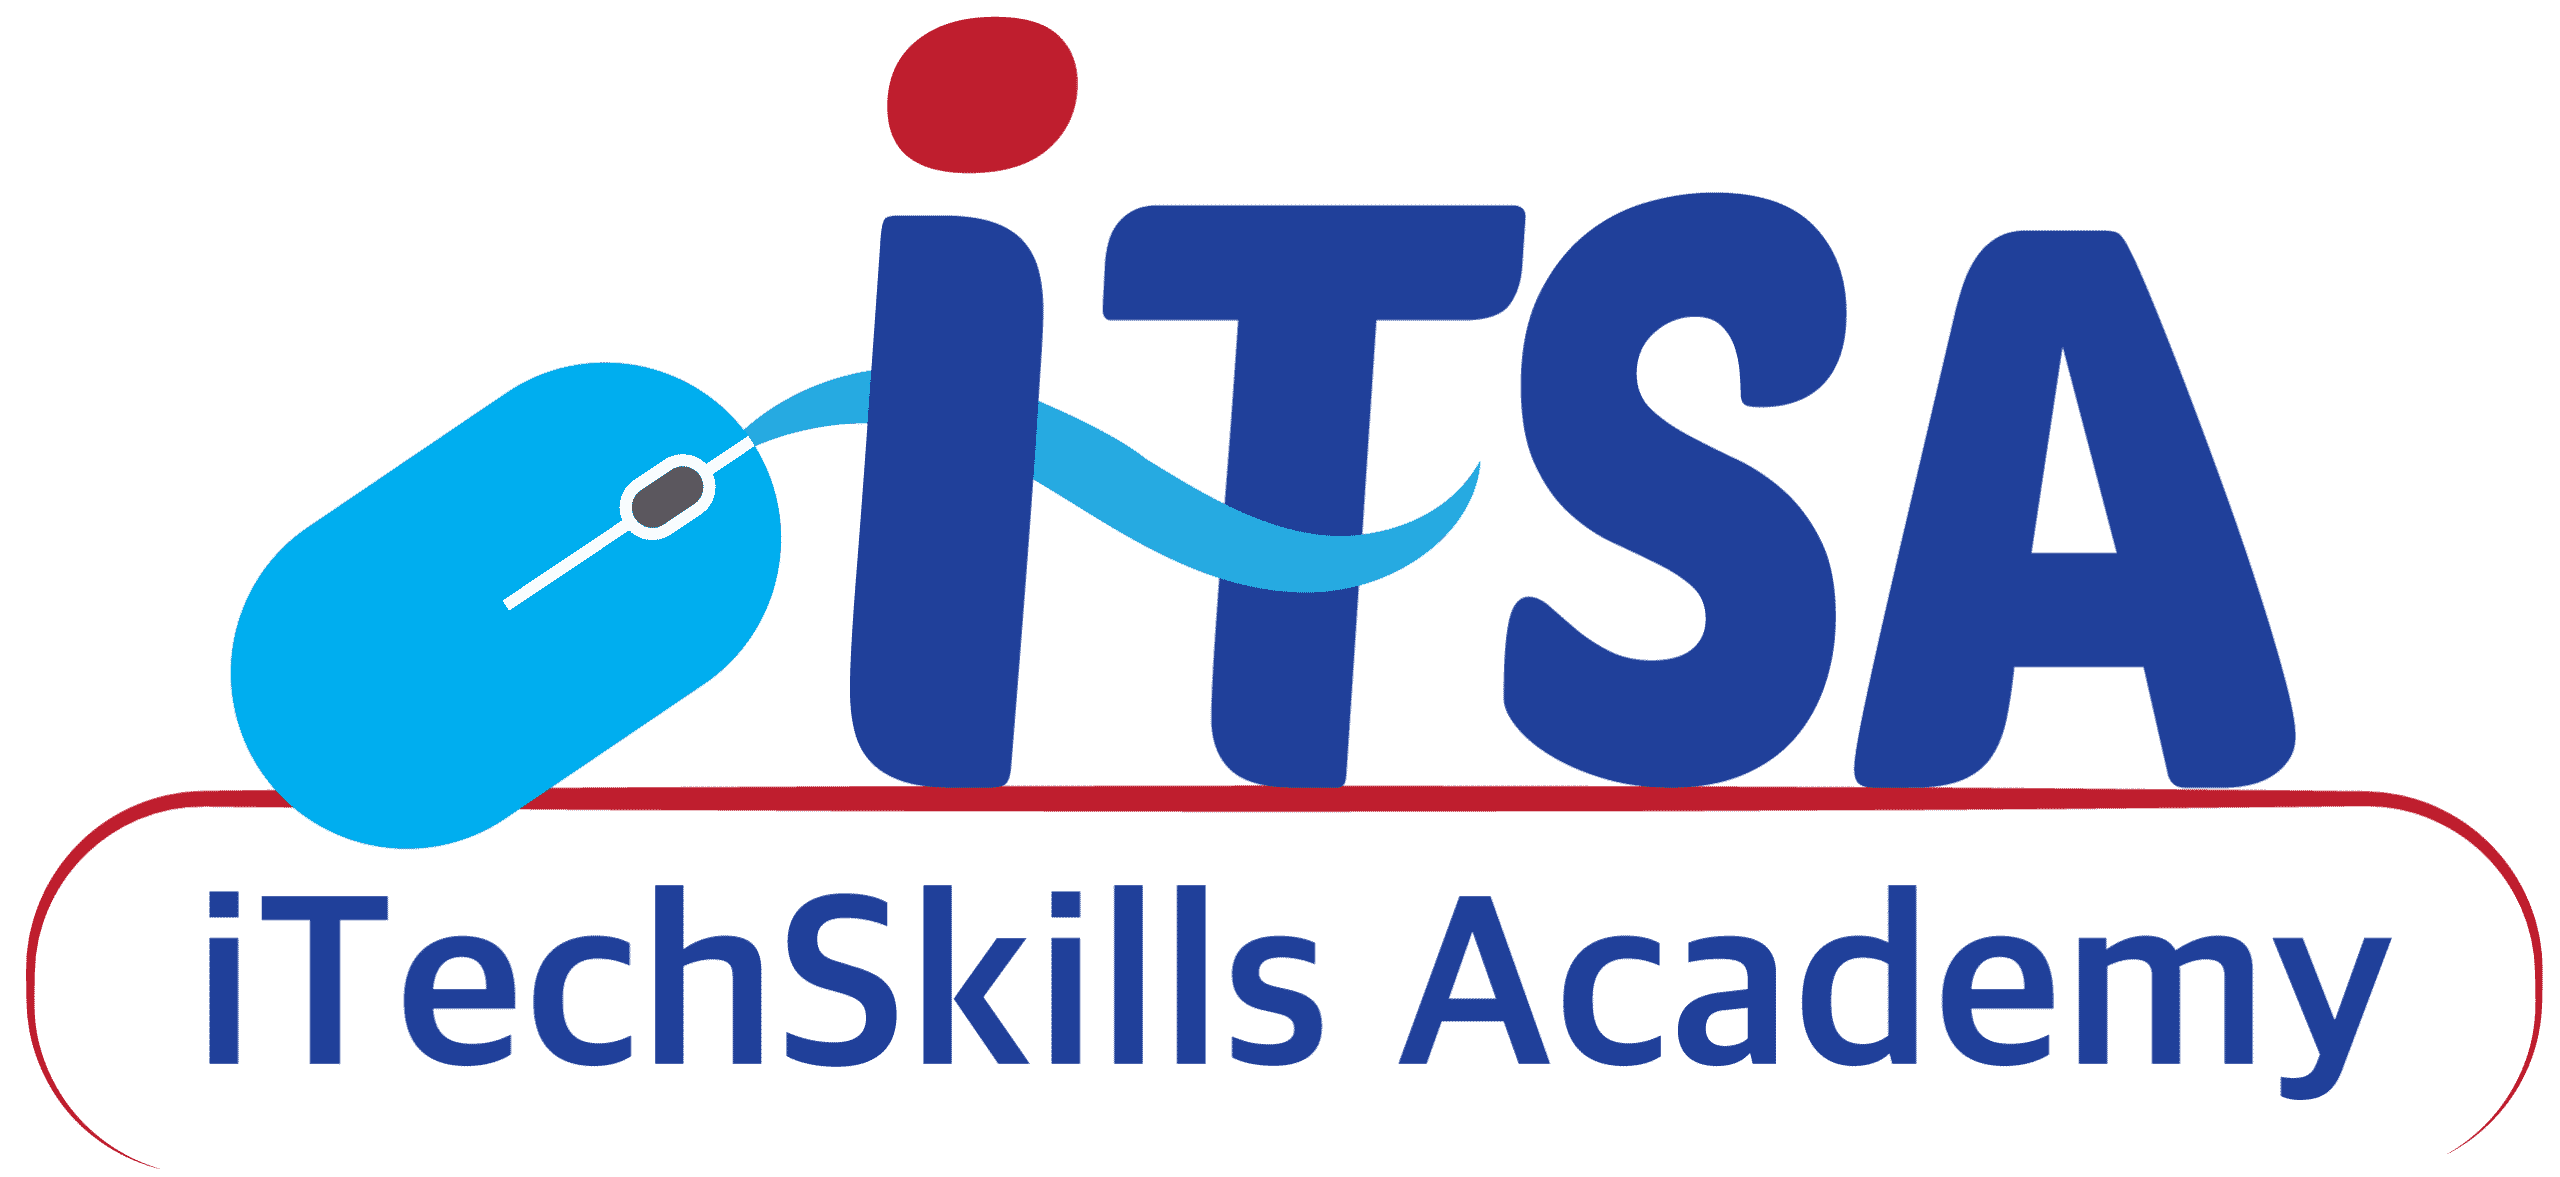 ITechSkills Academy Organization